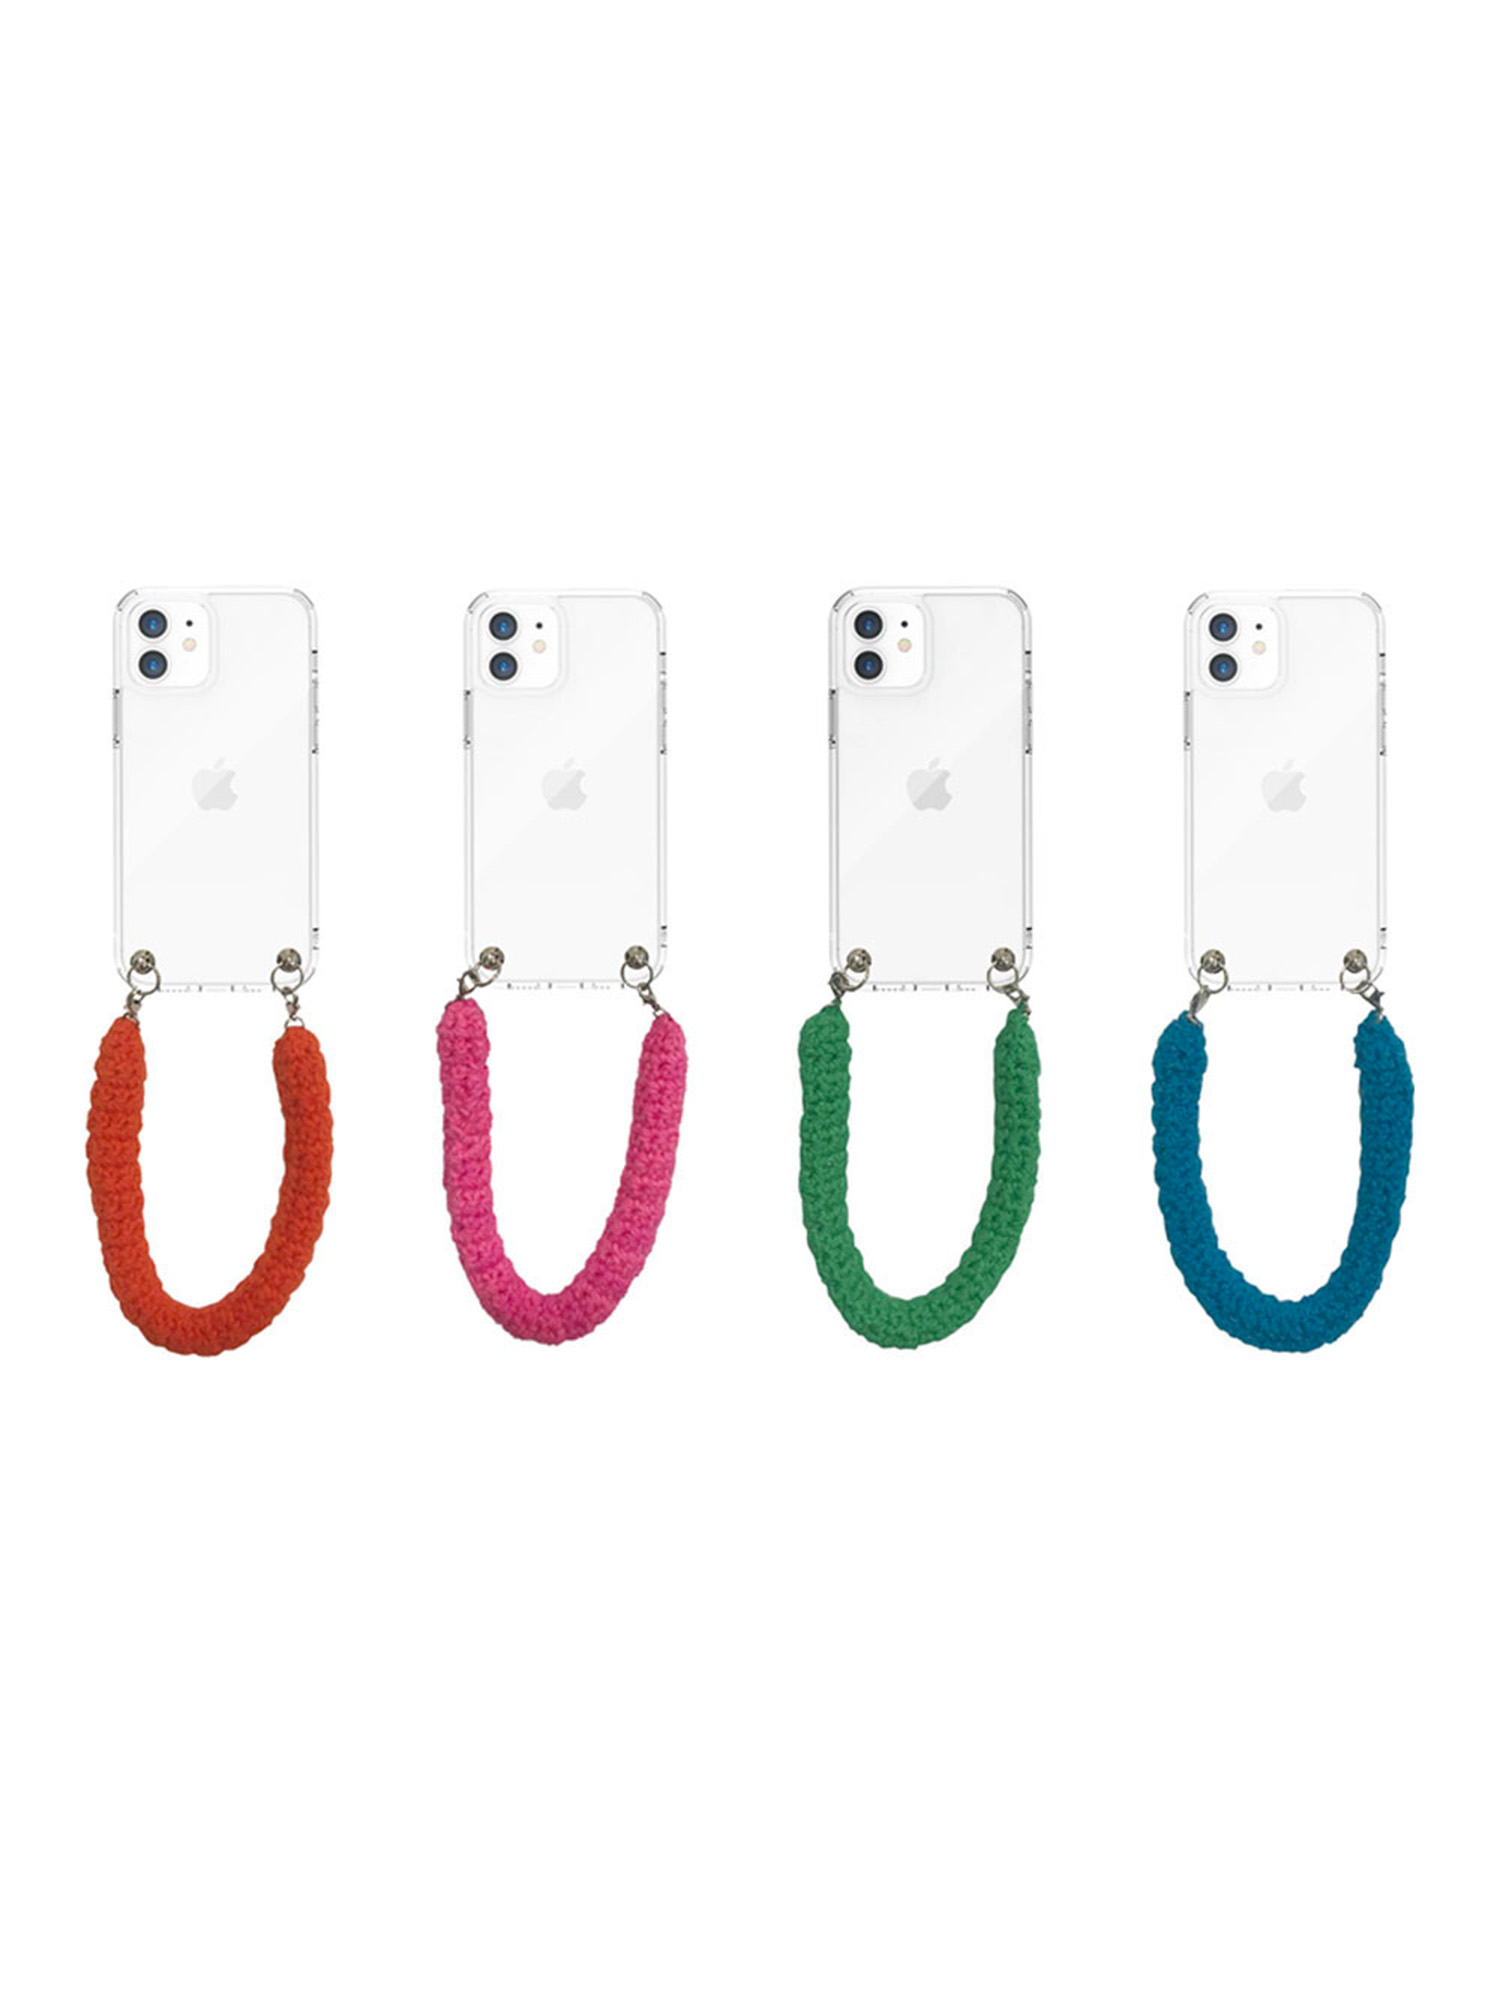 Handmade Phone Strap - 4 Colors